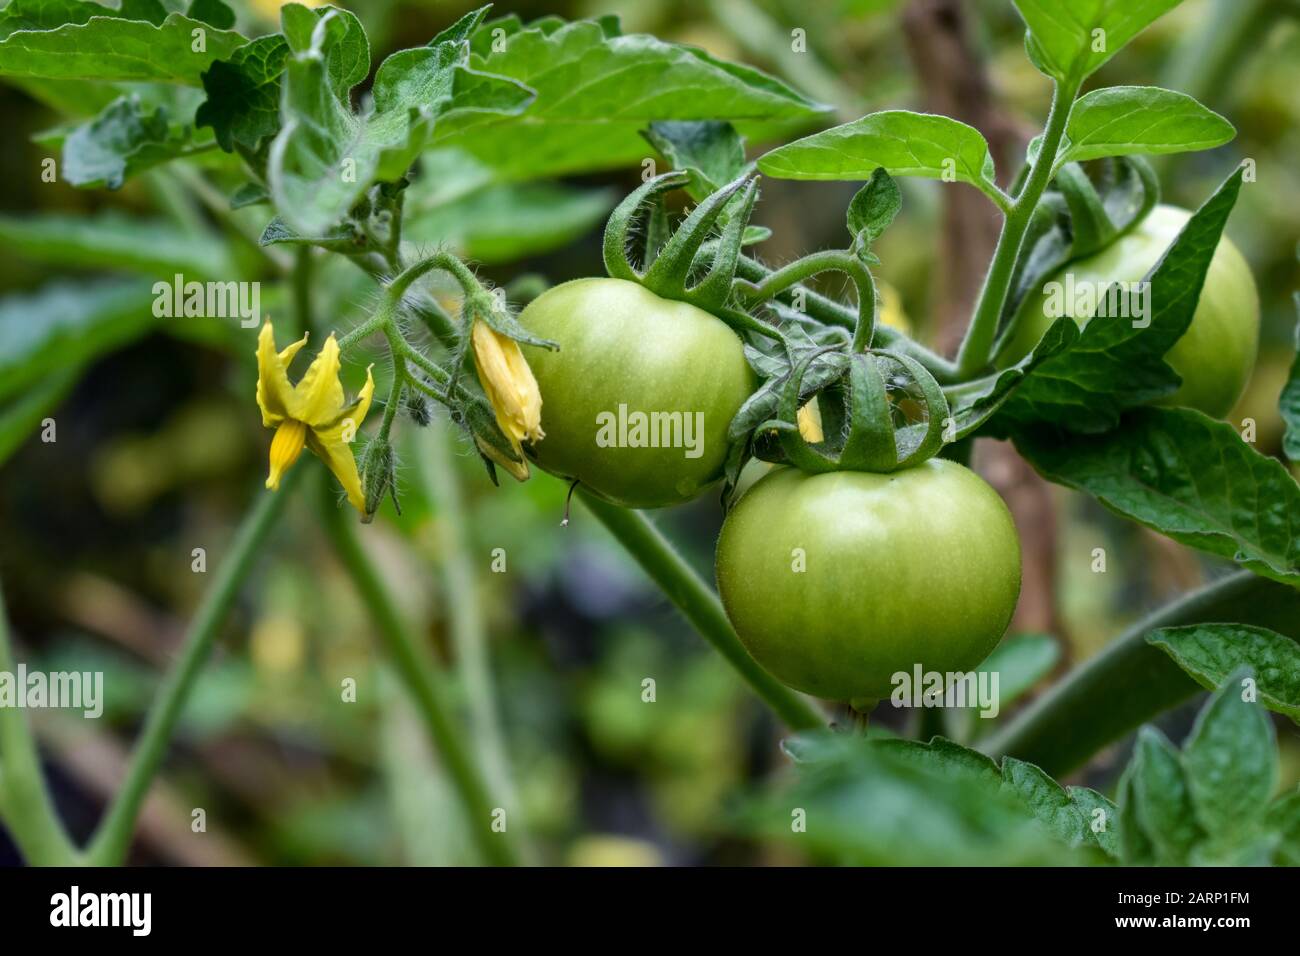 Baby Green tomato bunches in garden Stock Photo